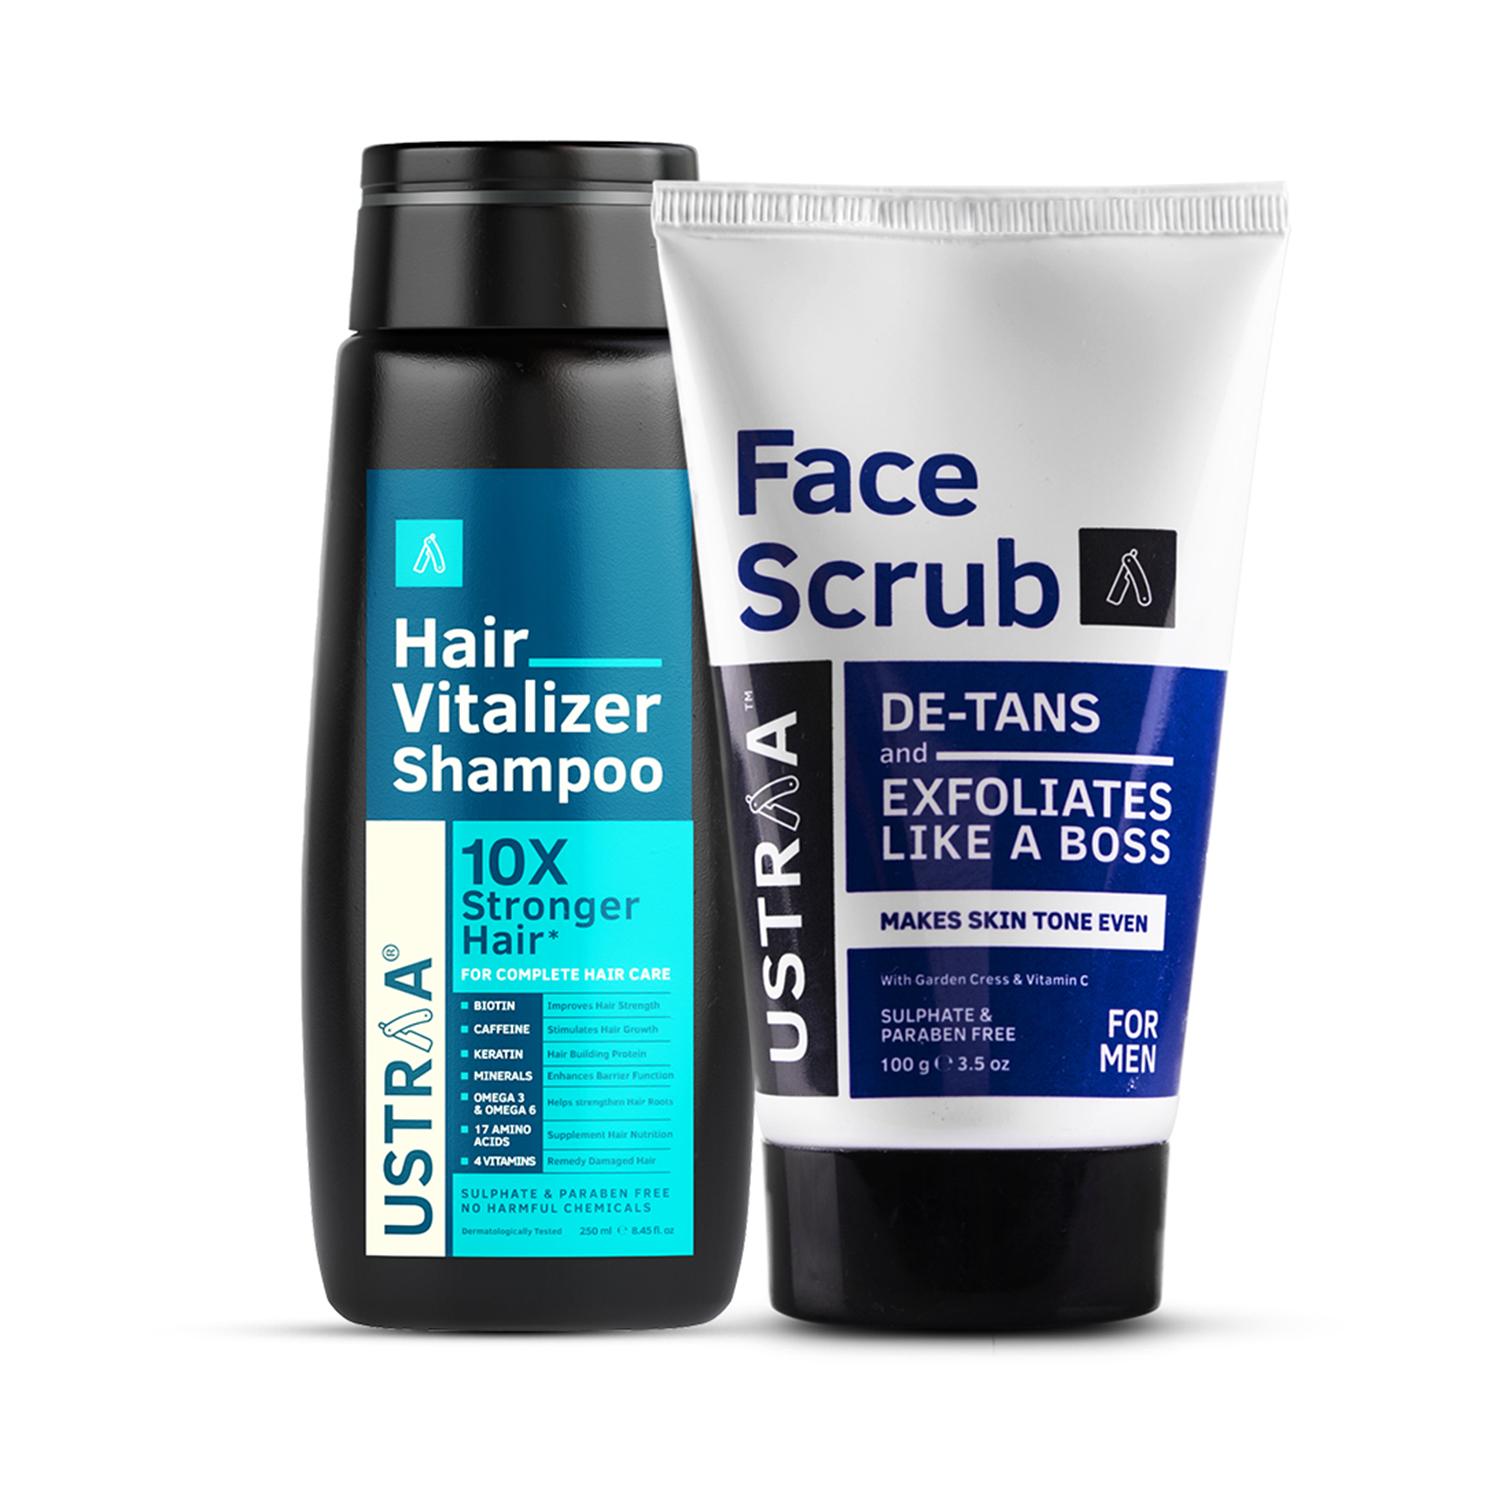 Ustraa | Ustraa Hair Vitalizer Shampoo & Face Scrub - Detan Combo